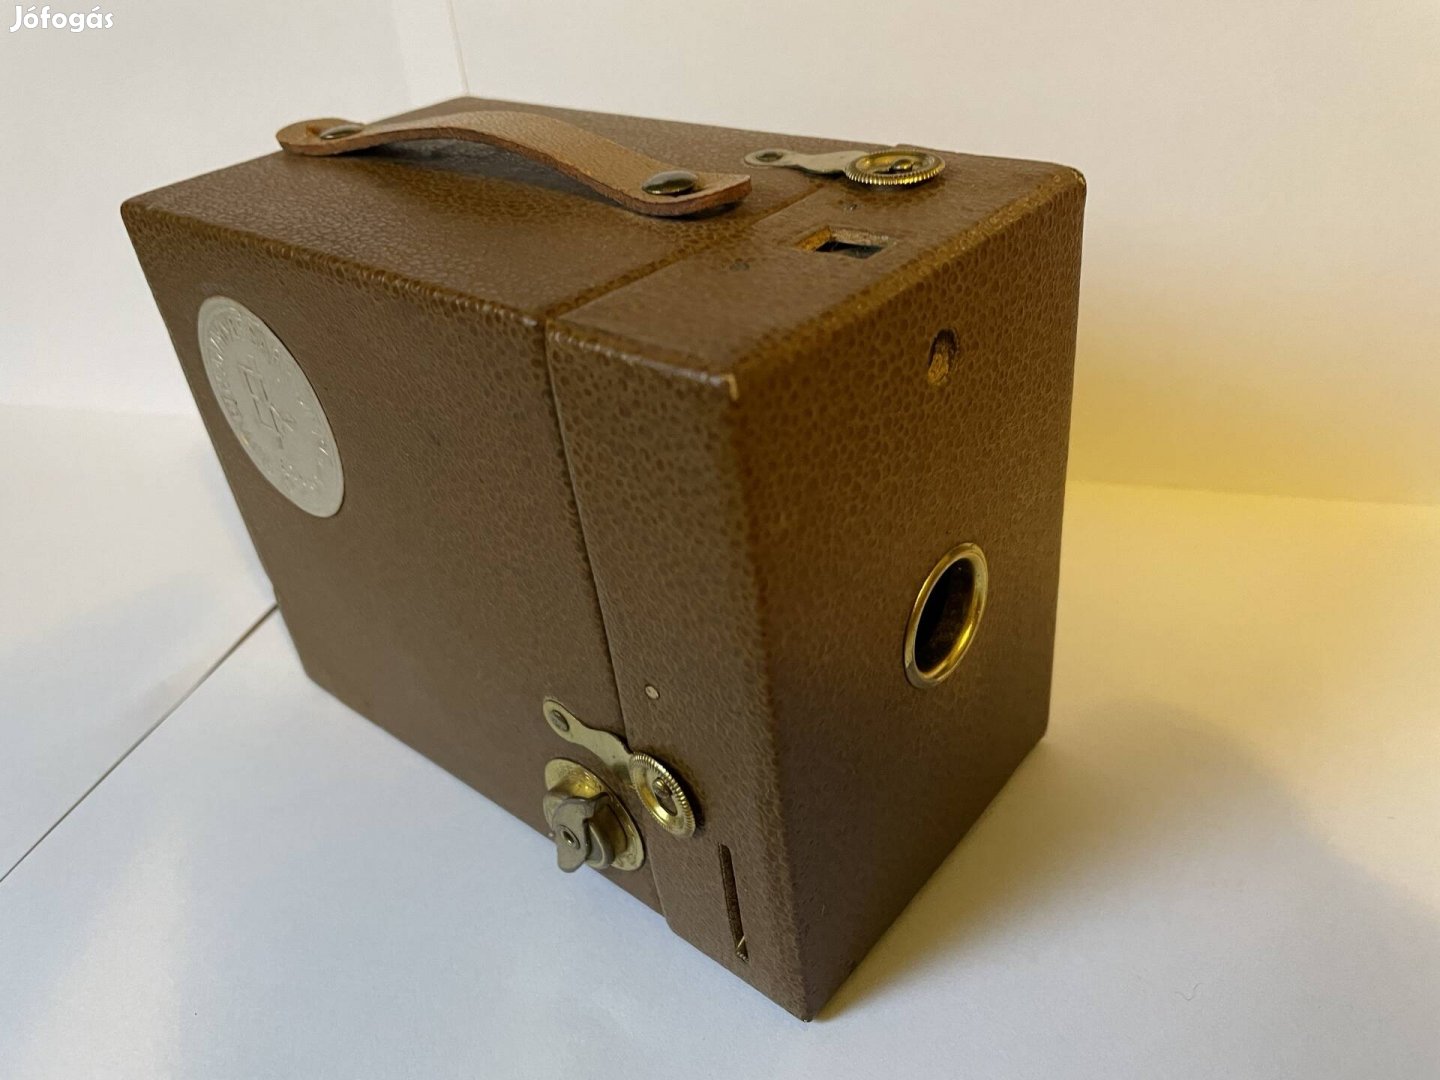 Eladó 1930's Kodak Anniversary Camera